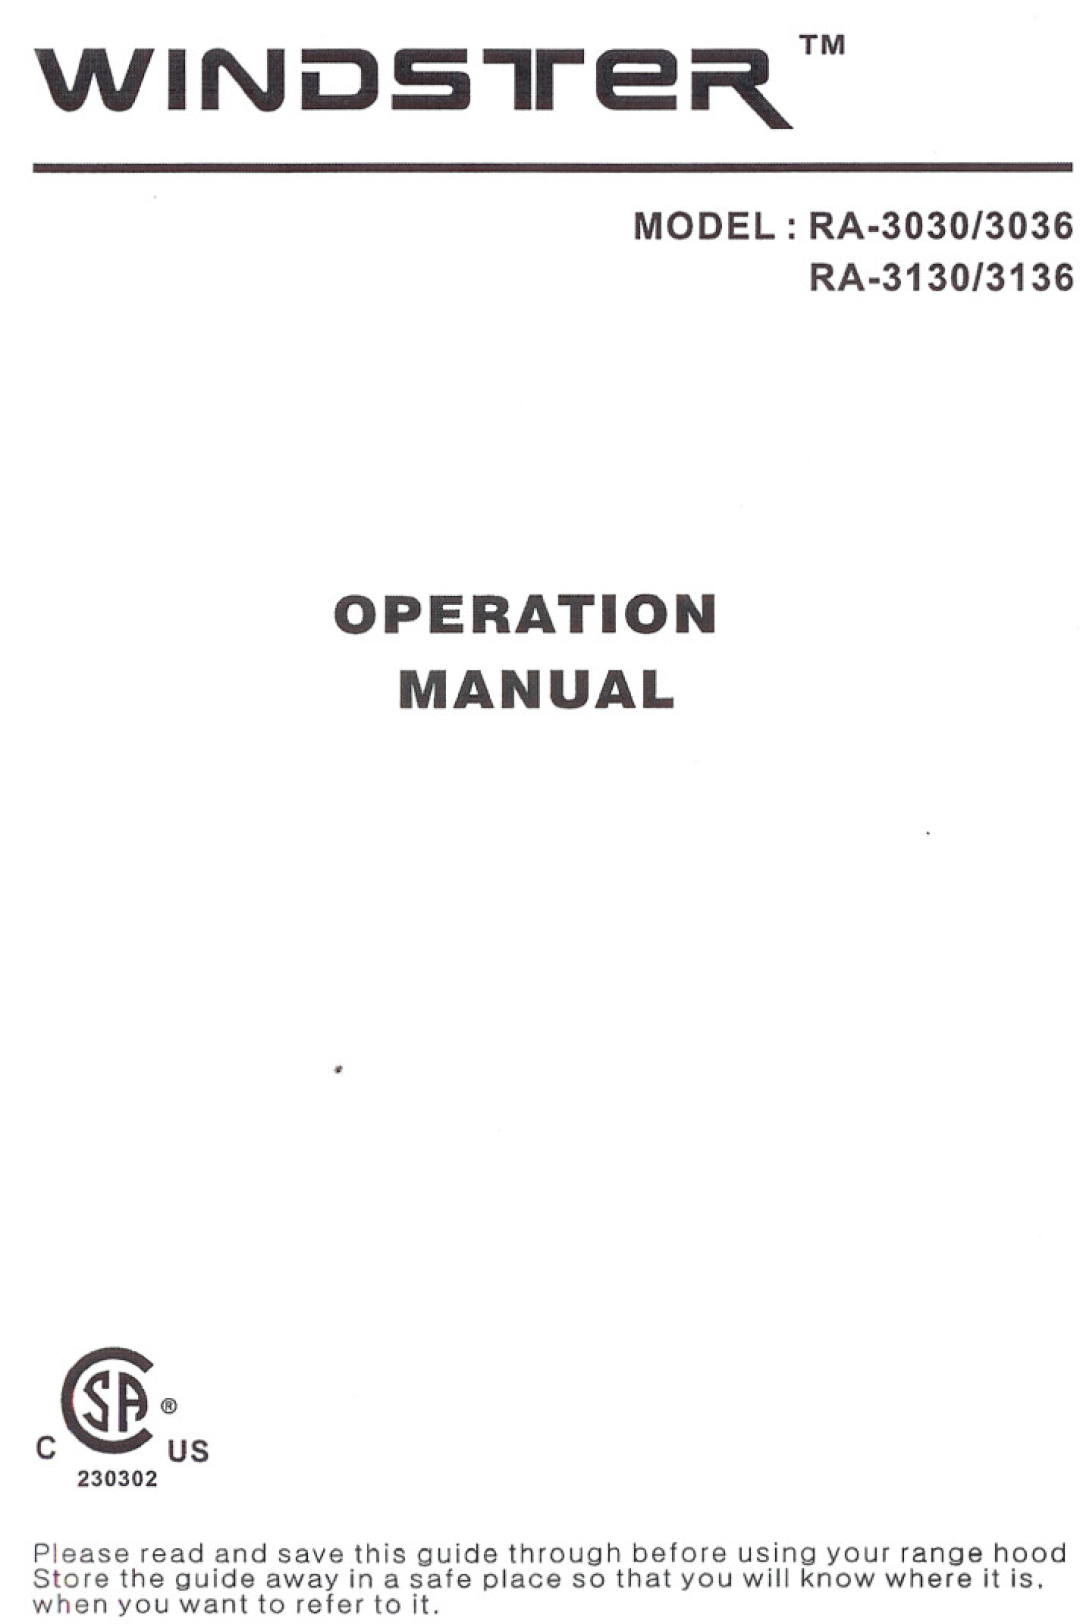 Windster operation manual MODEL RA.3030/3036 RA.3130/3136, WINi JSre~TM, c@~s, 230302 